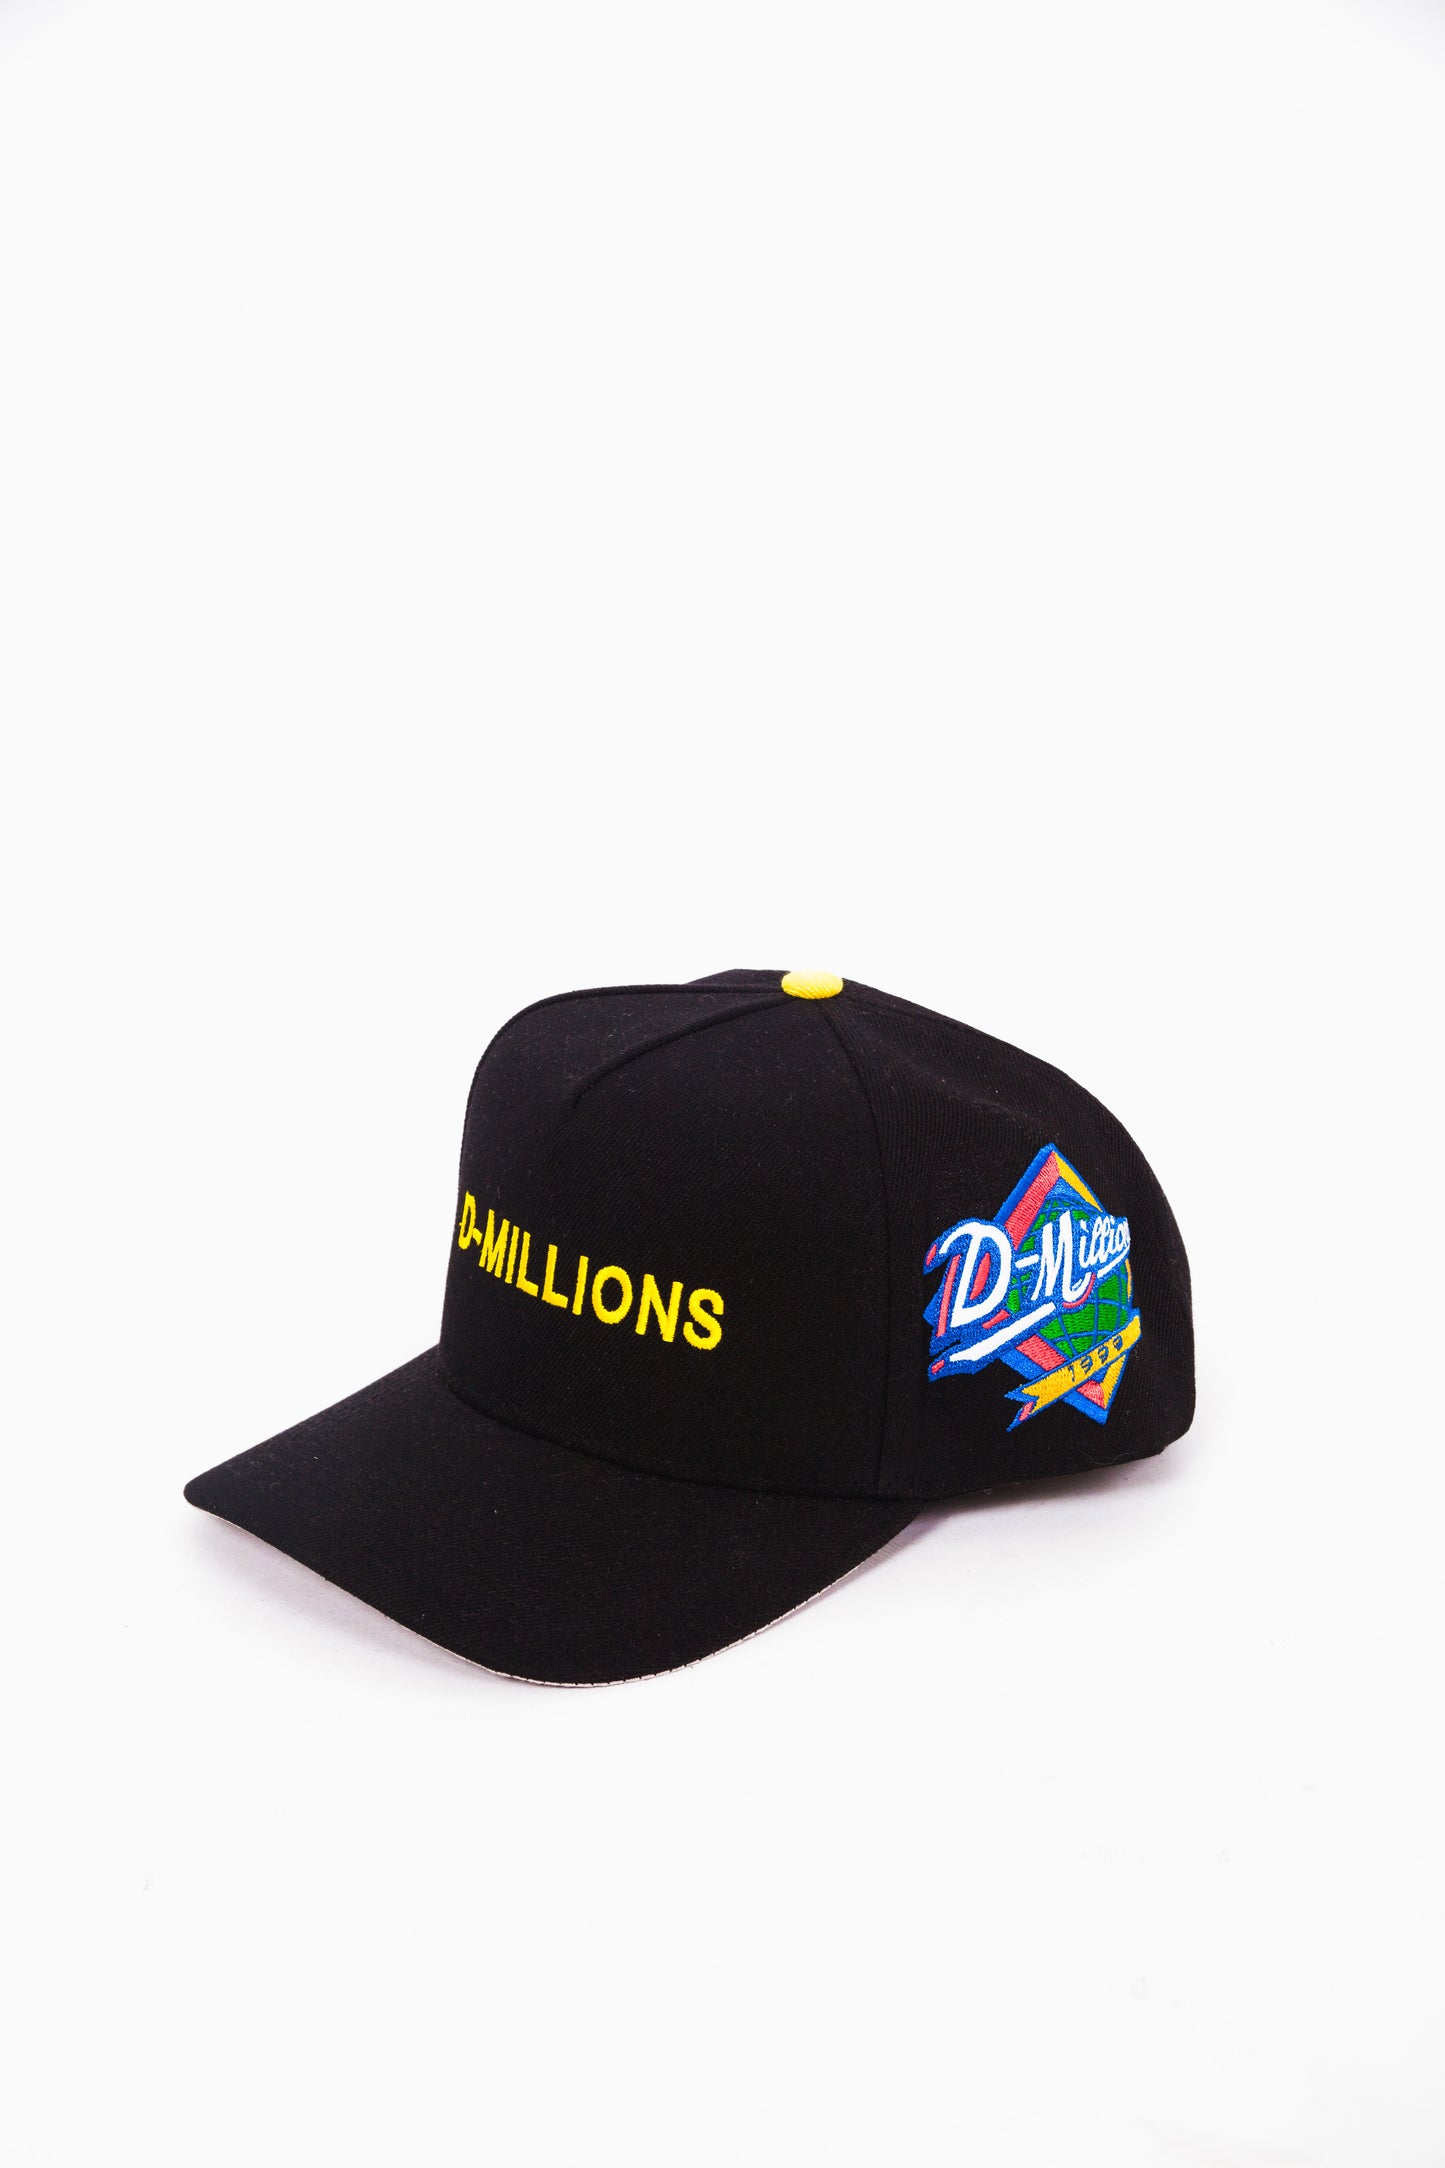 Baseball Cap D-Millions Black/Yellow